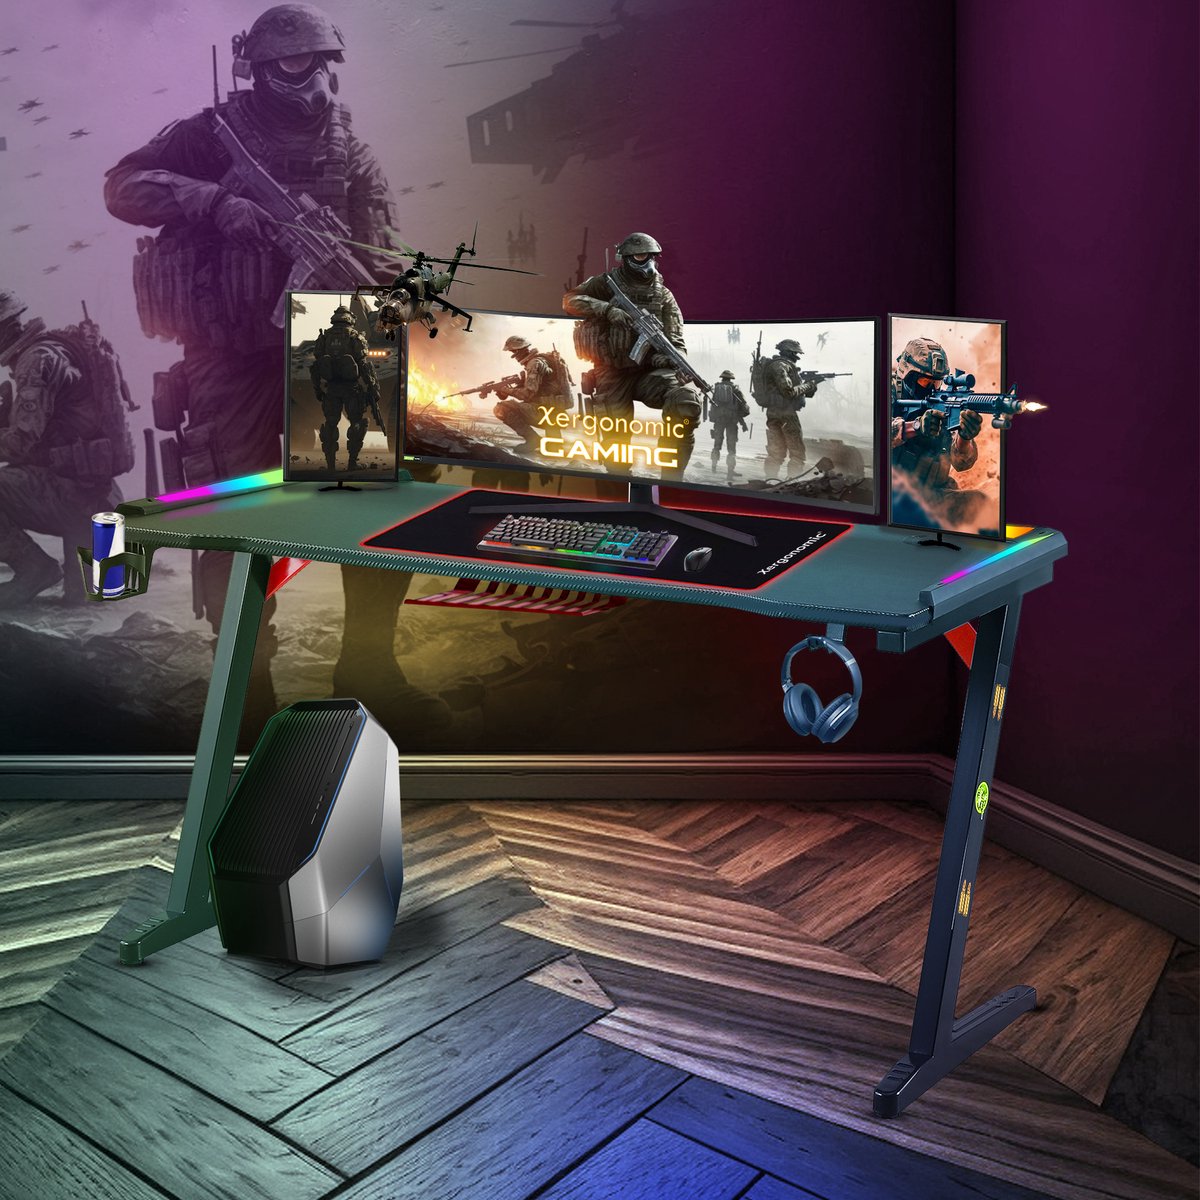 Xergonomic Hard2Kill Gaming Desk - Game Desk - Desk - Game Desk 140cm